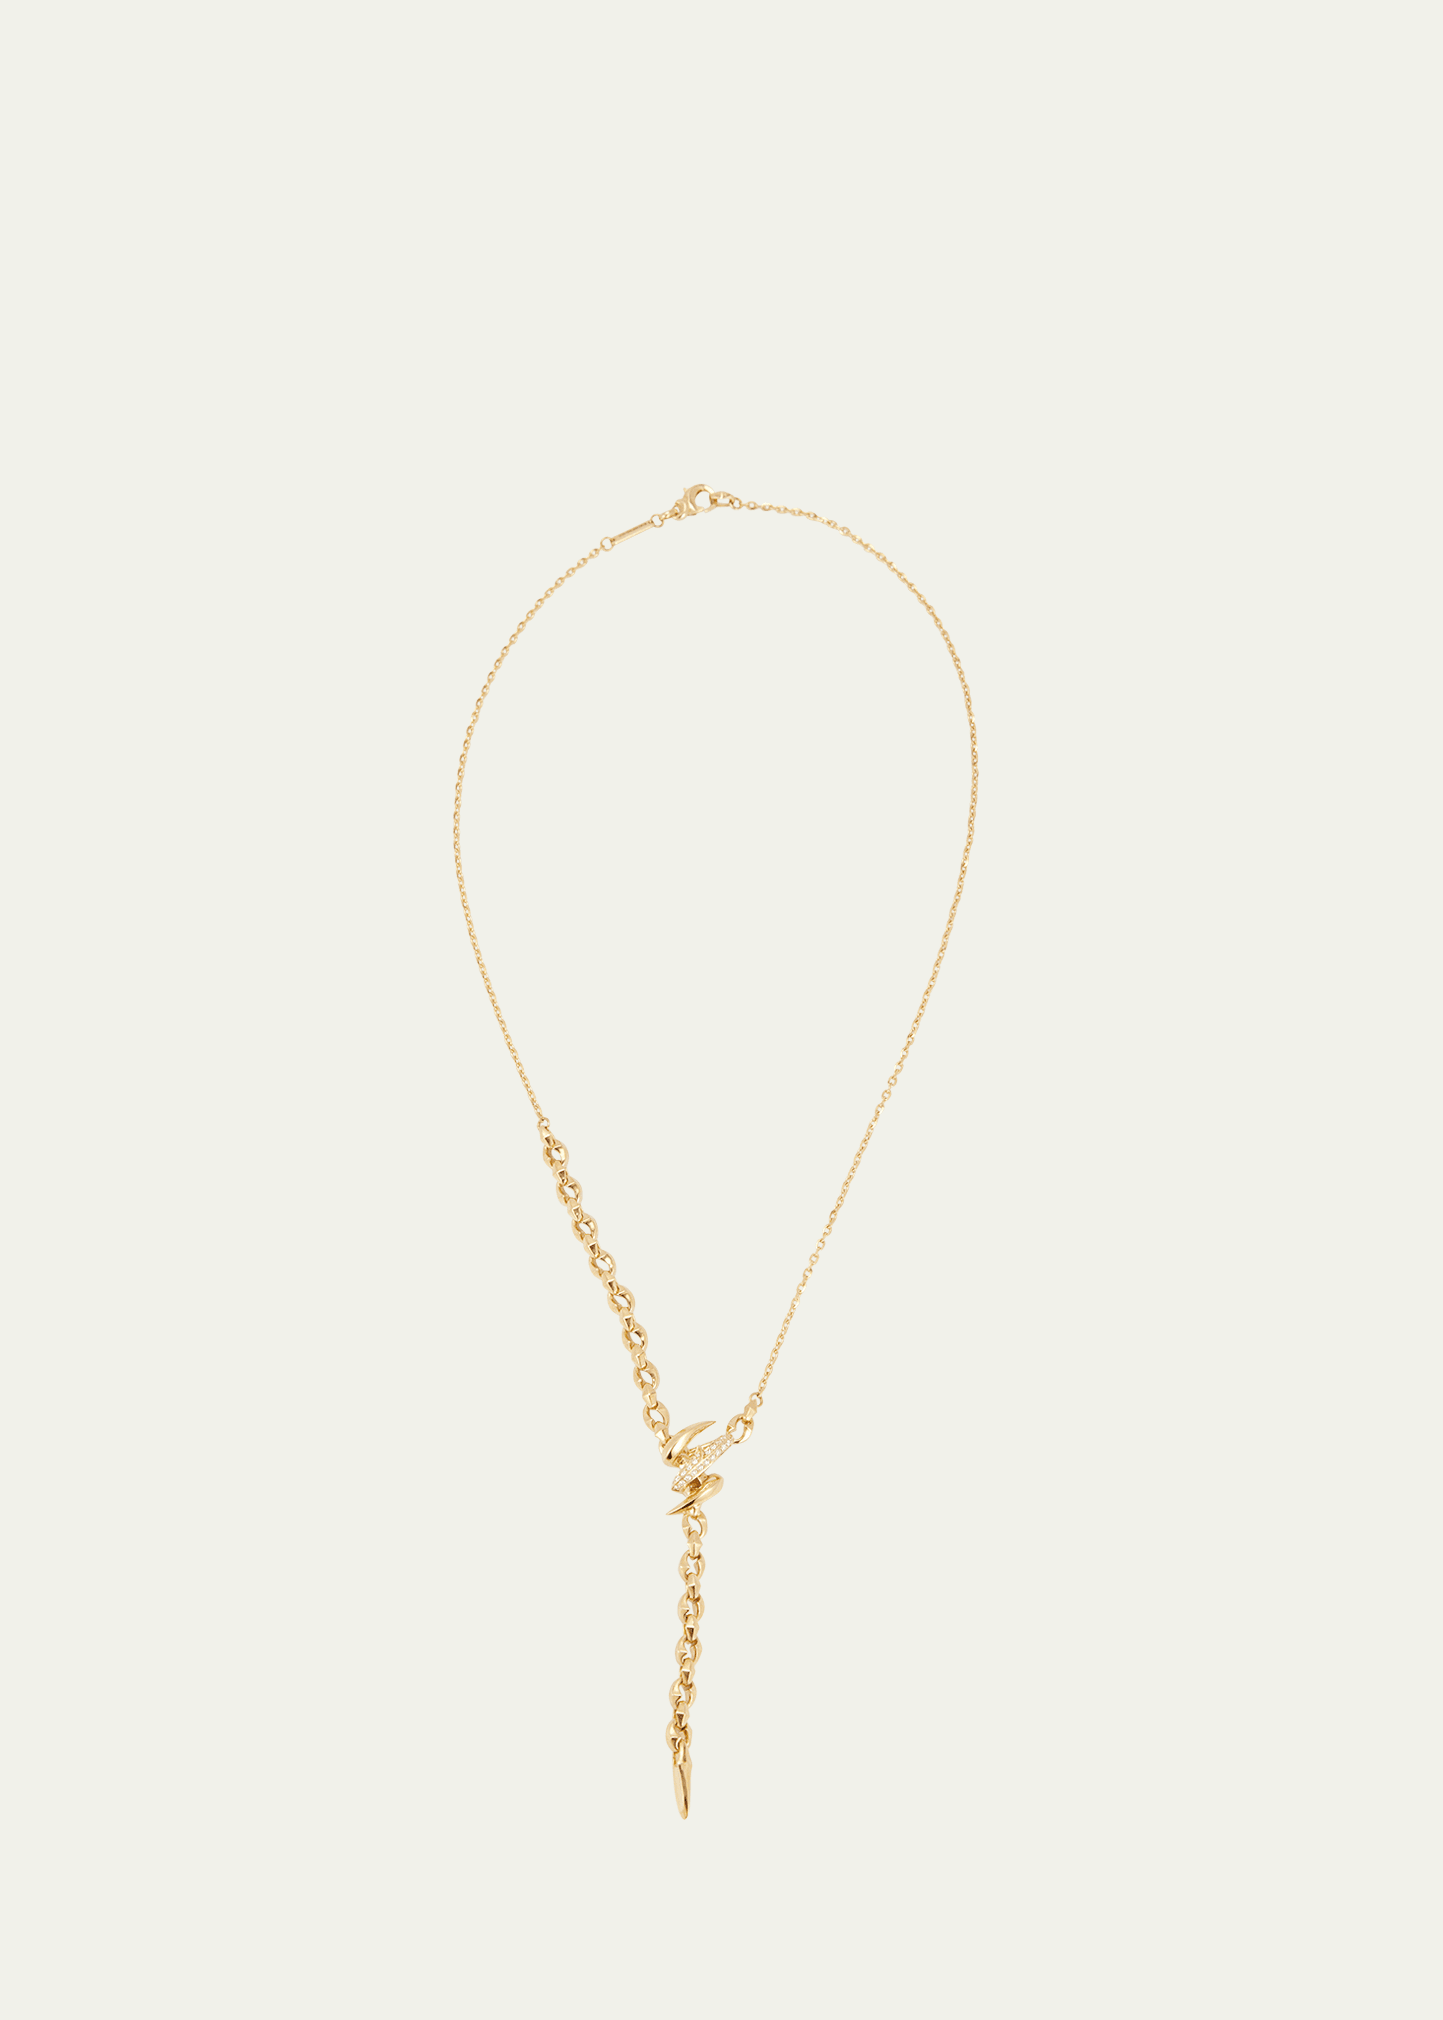 Stephen Webster Thorn Embrace 18k Gold Entwined Lariat Necklace